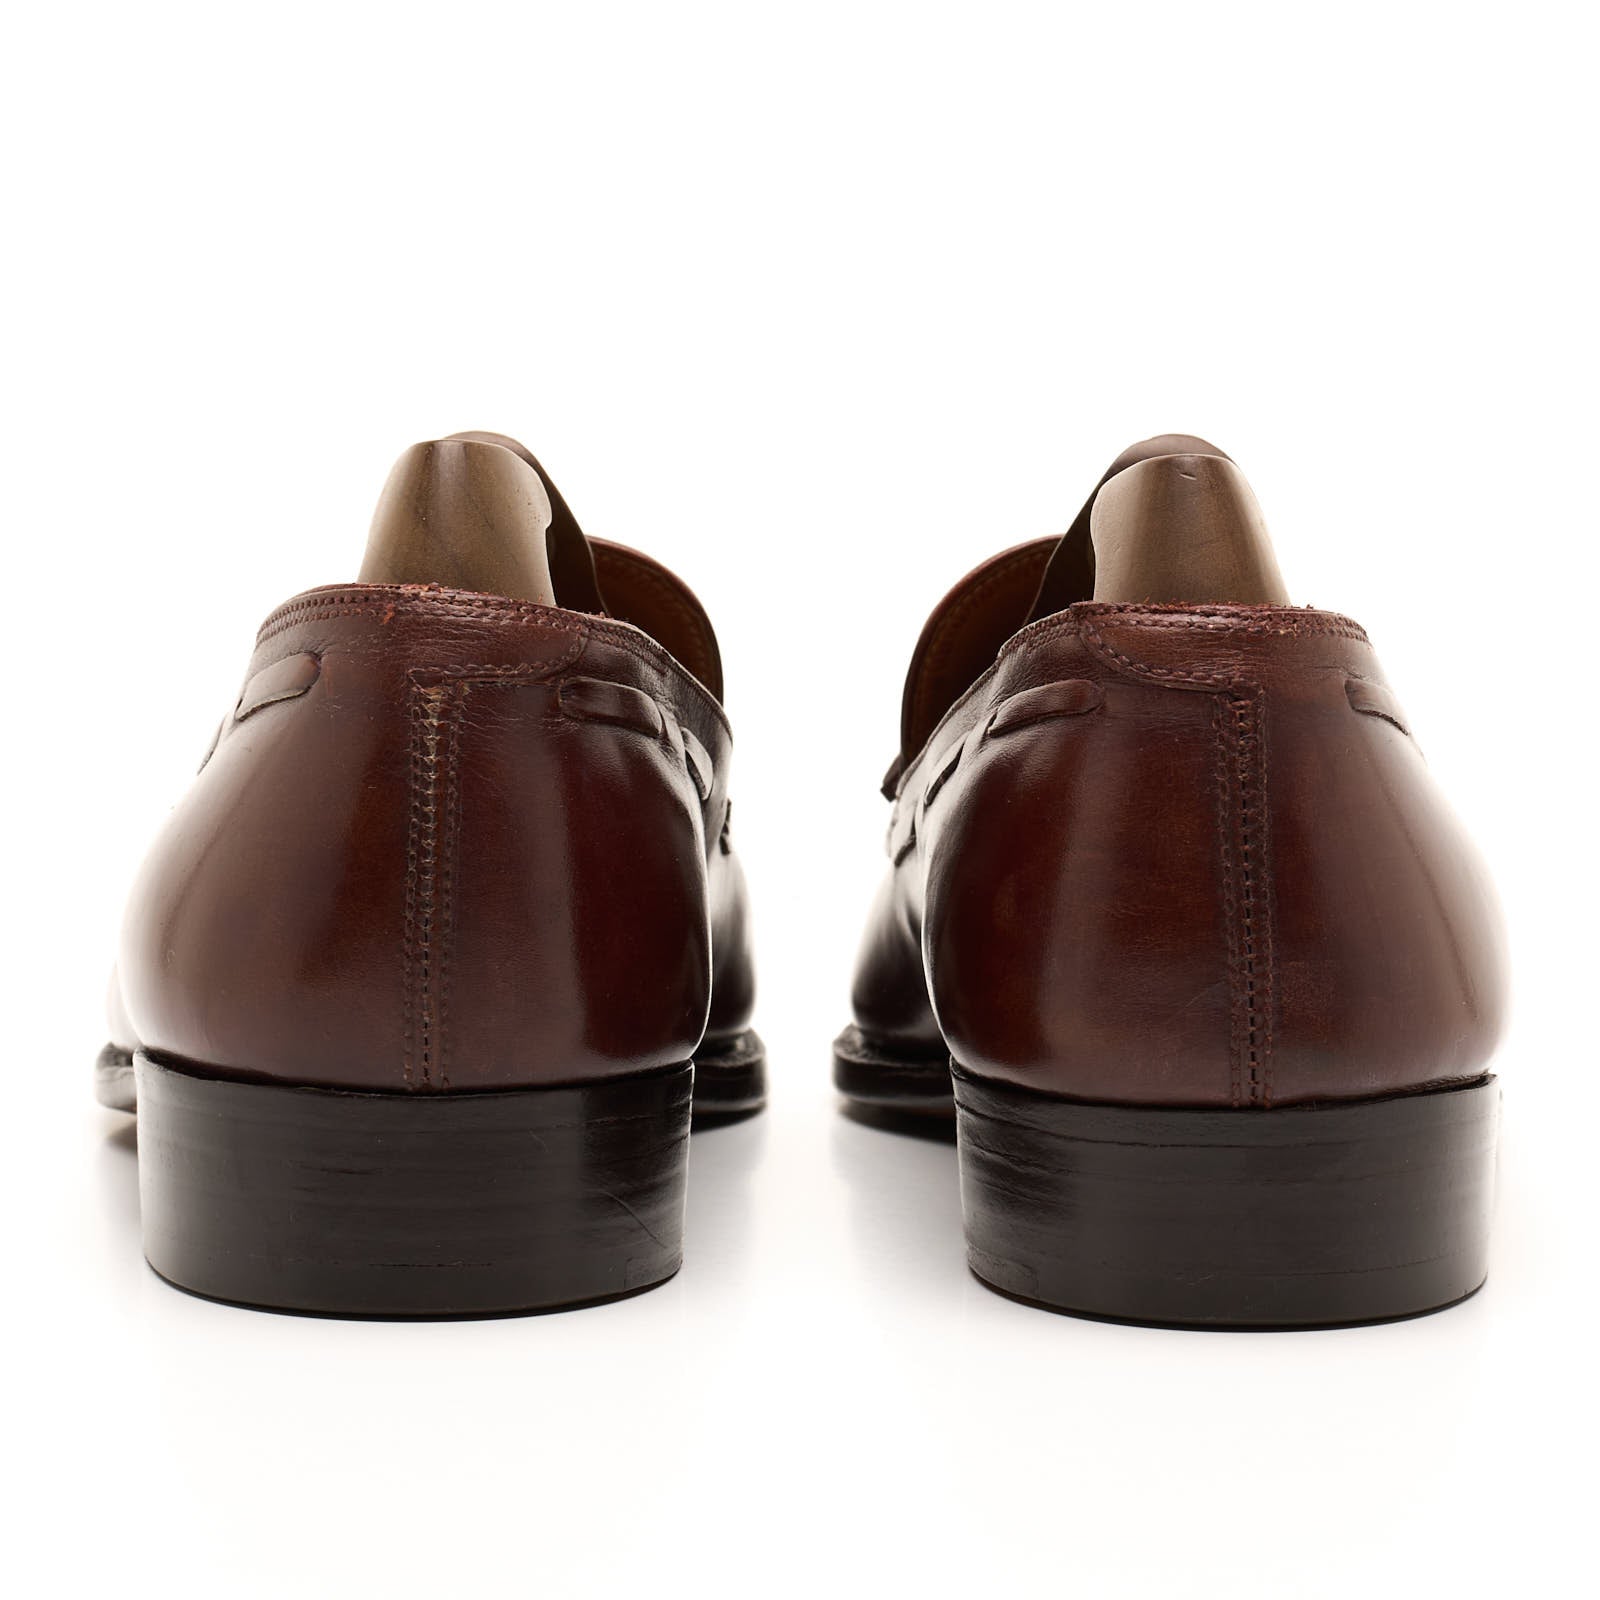 JOHN LOBB Bespoke Brown Tassel Loafers Shoes UK 6.5E US 7.5 Last 4515